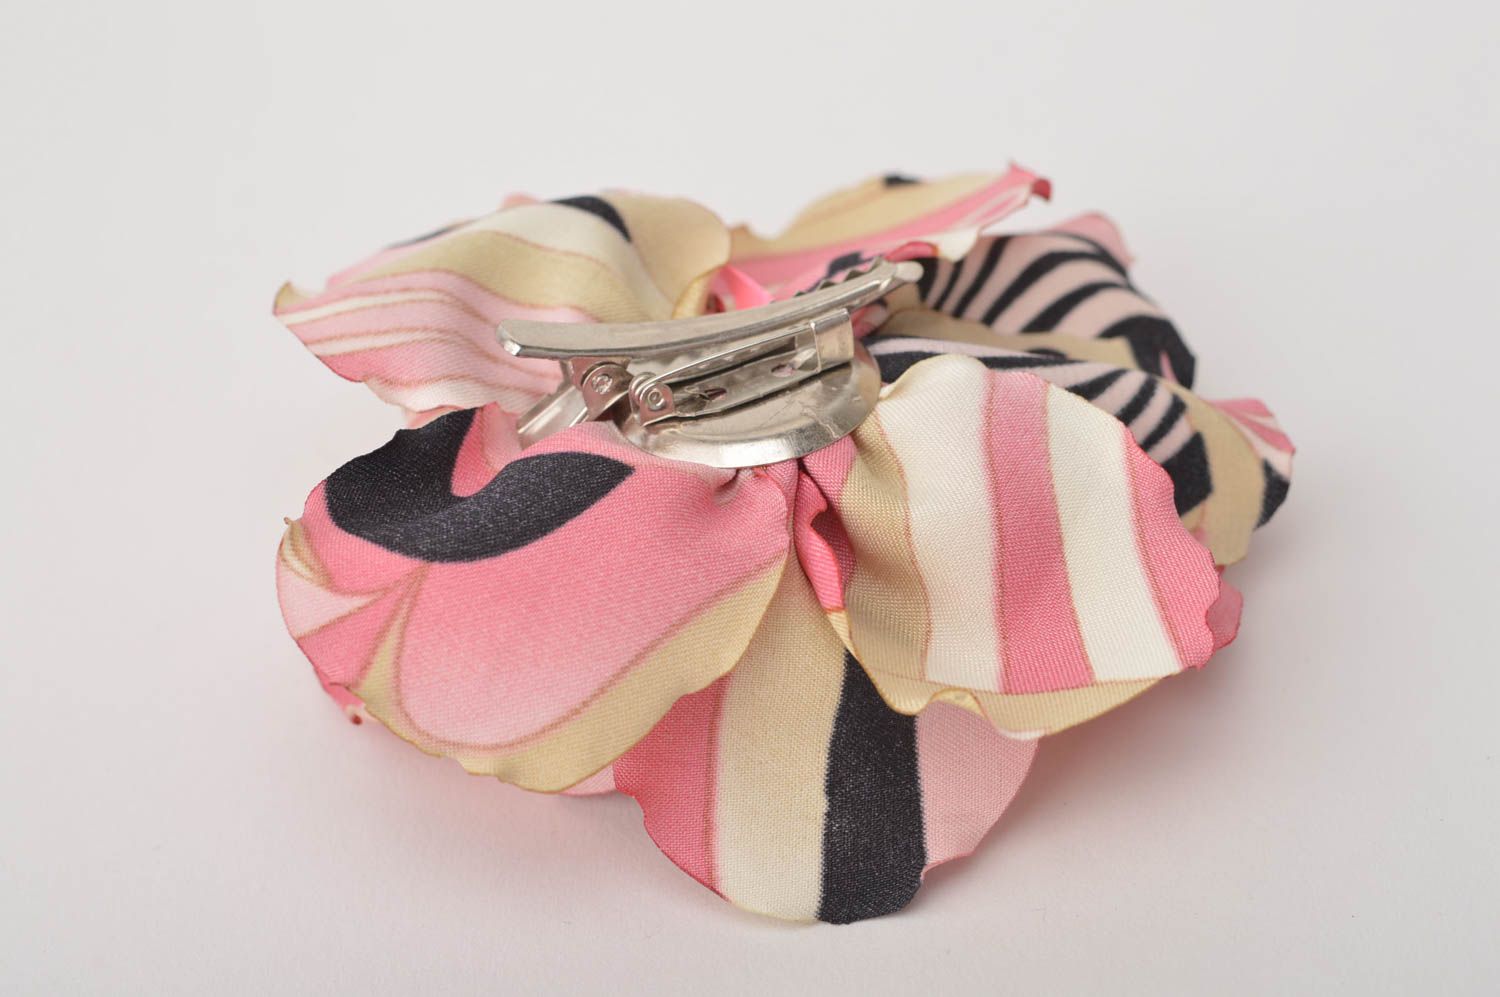 Flower hair clip handmade brooch homemade jewelry women accessories gift ideas photo 5